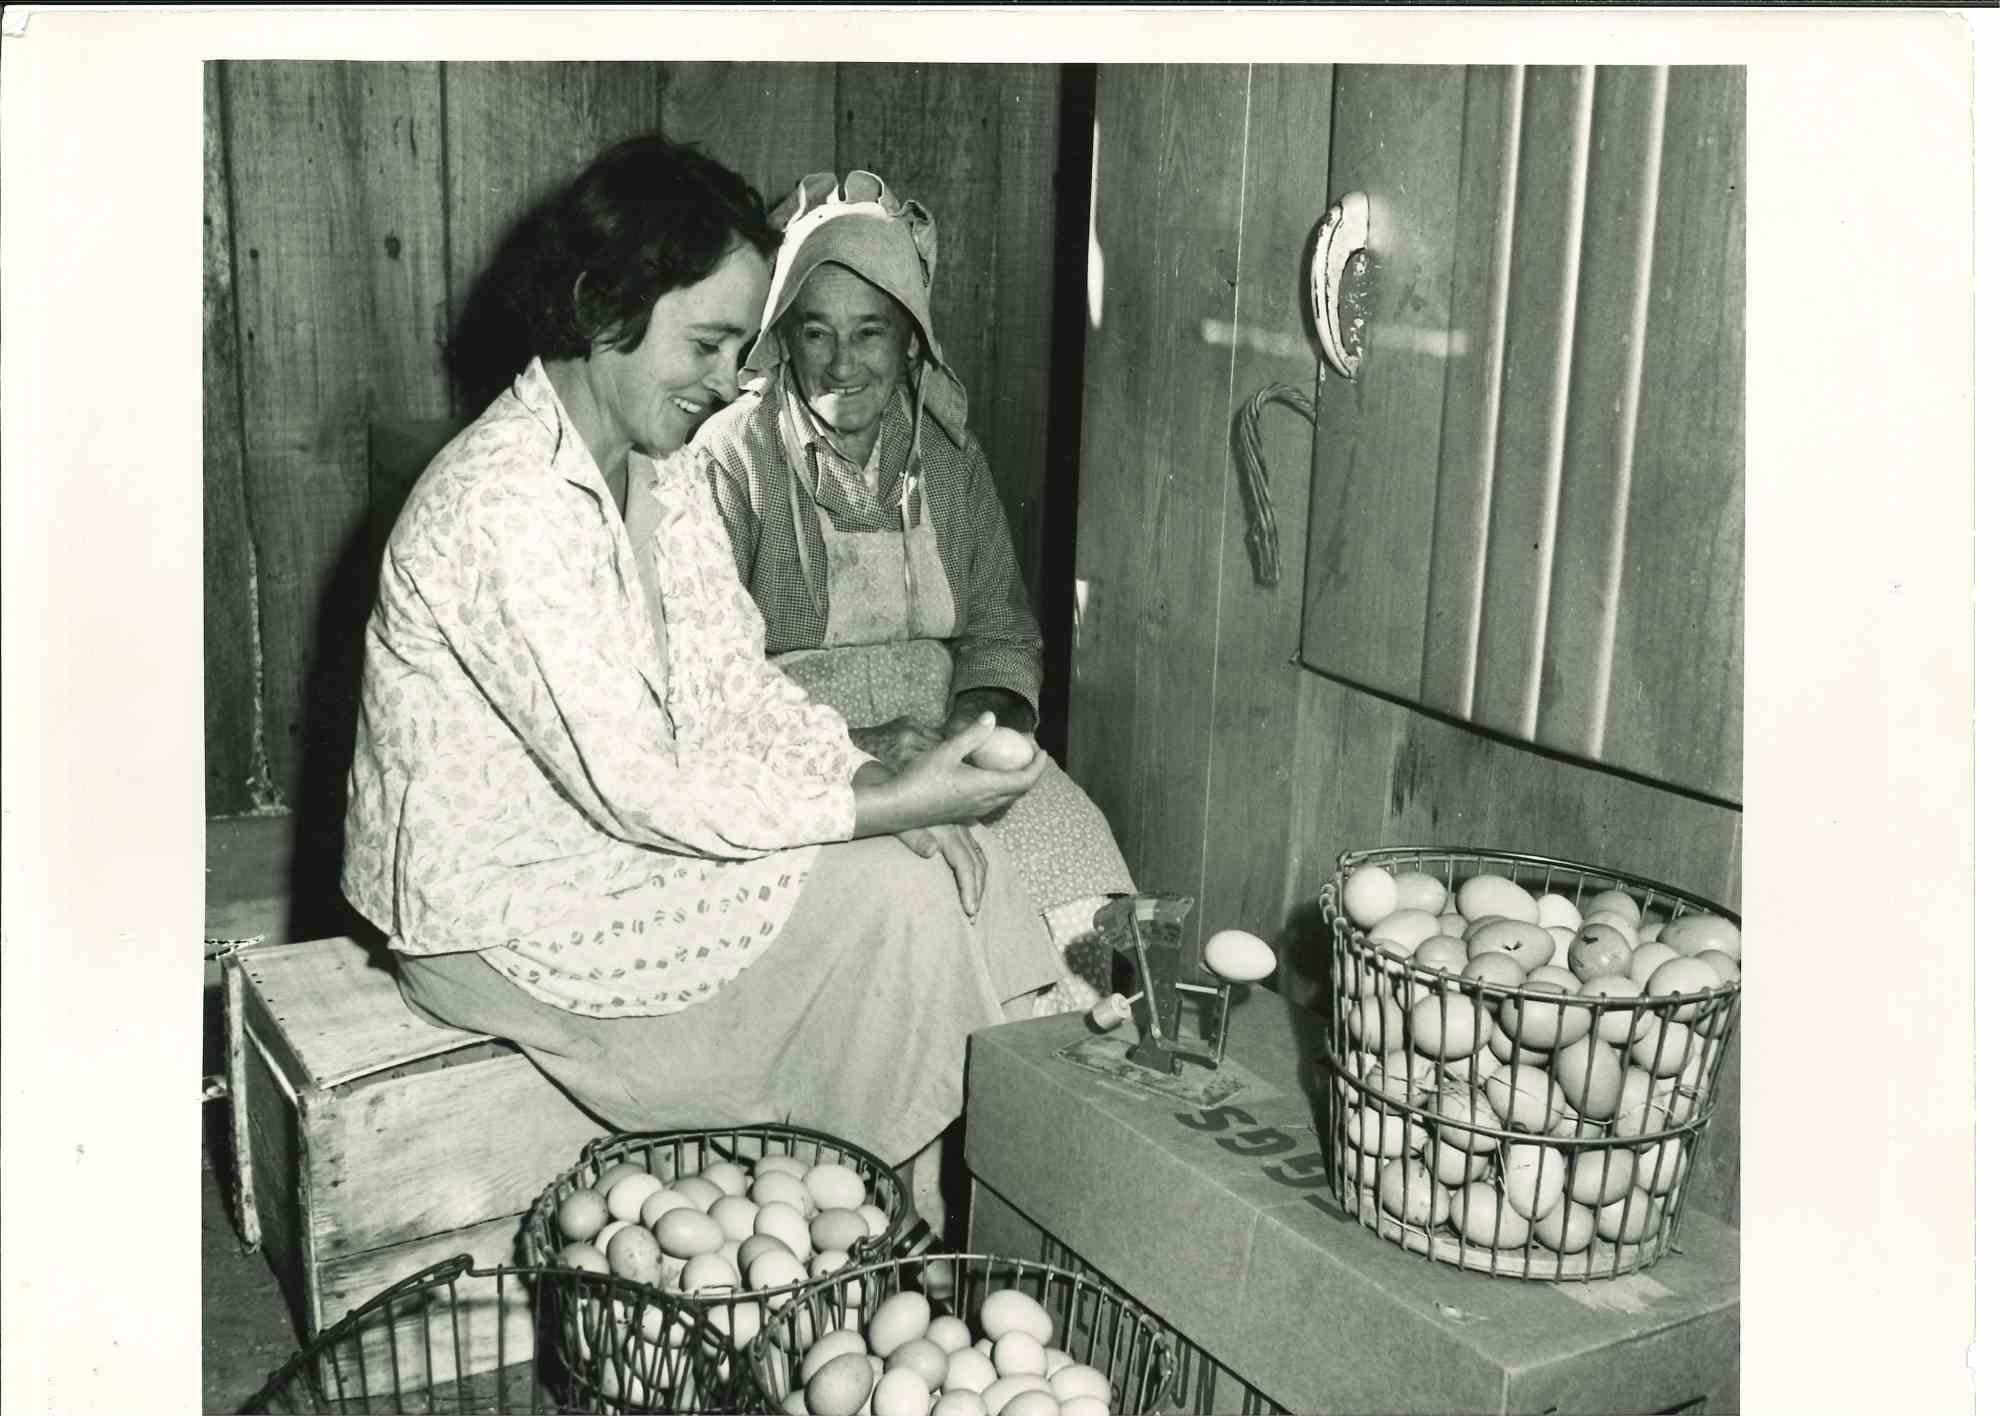 Unknown Figurative Photograph - Sugar Cane Farmer - American Vintage Photograph - Mid 20th Century